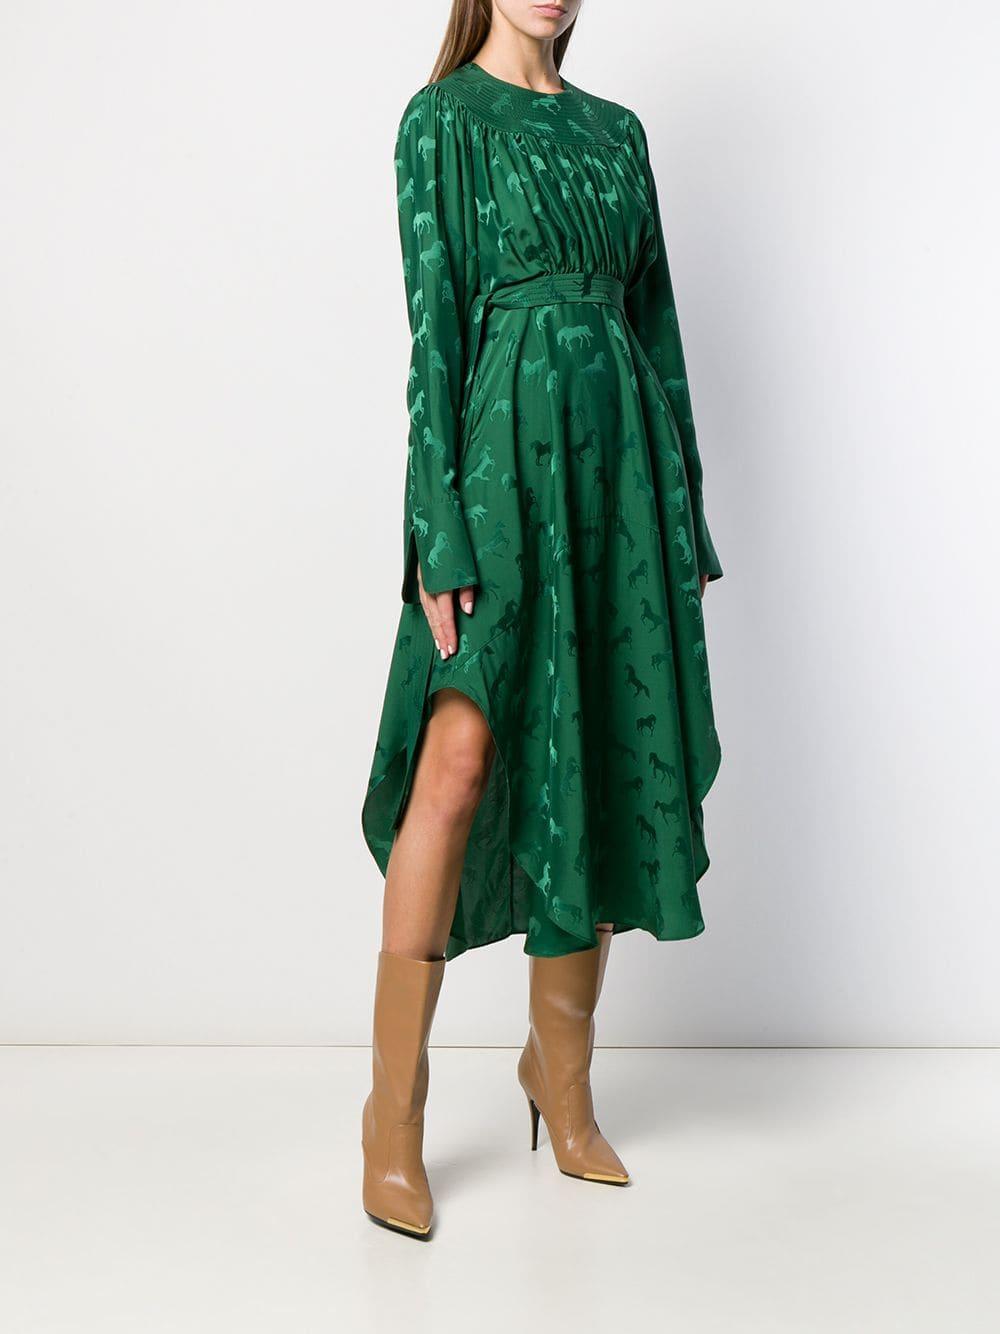 Stella McCartney Satin Horses Jacquard Midi Dress in Green | Lyst